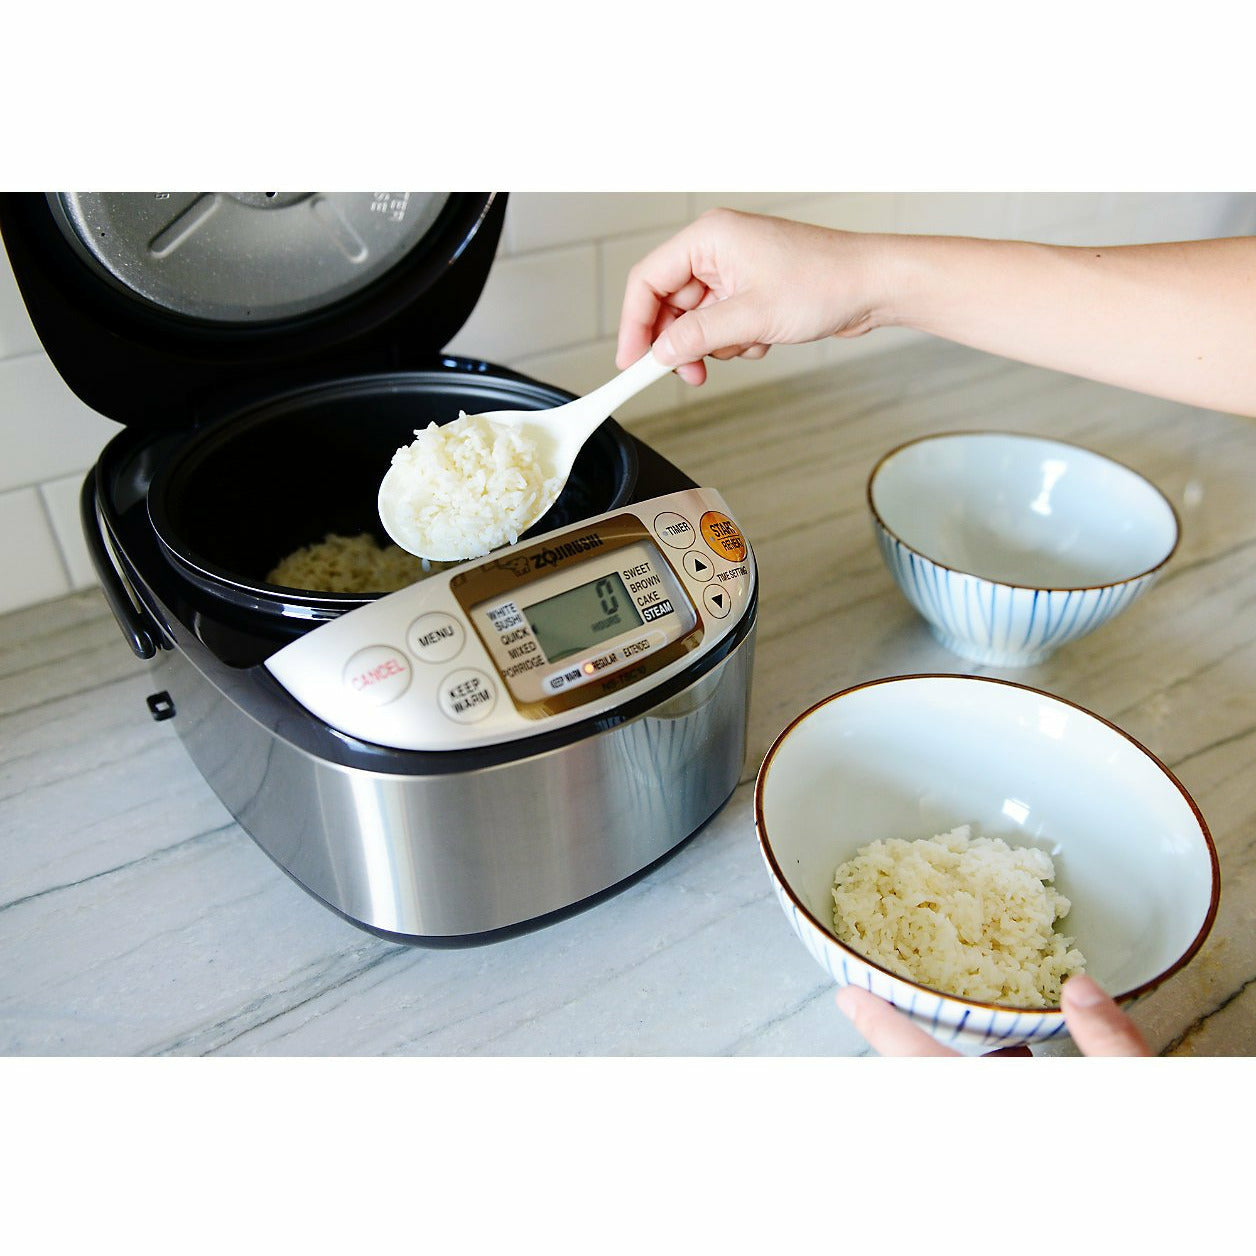 Zojirushi Micom Rice Cooker and Warmer 5.5 Cup